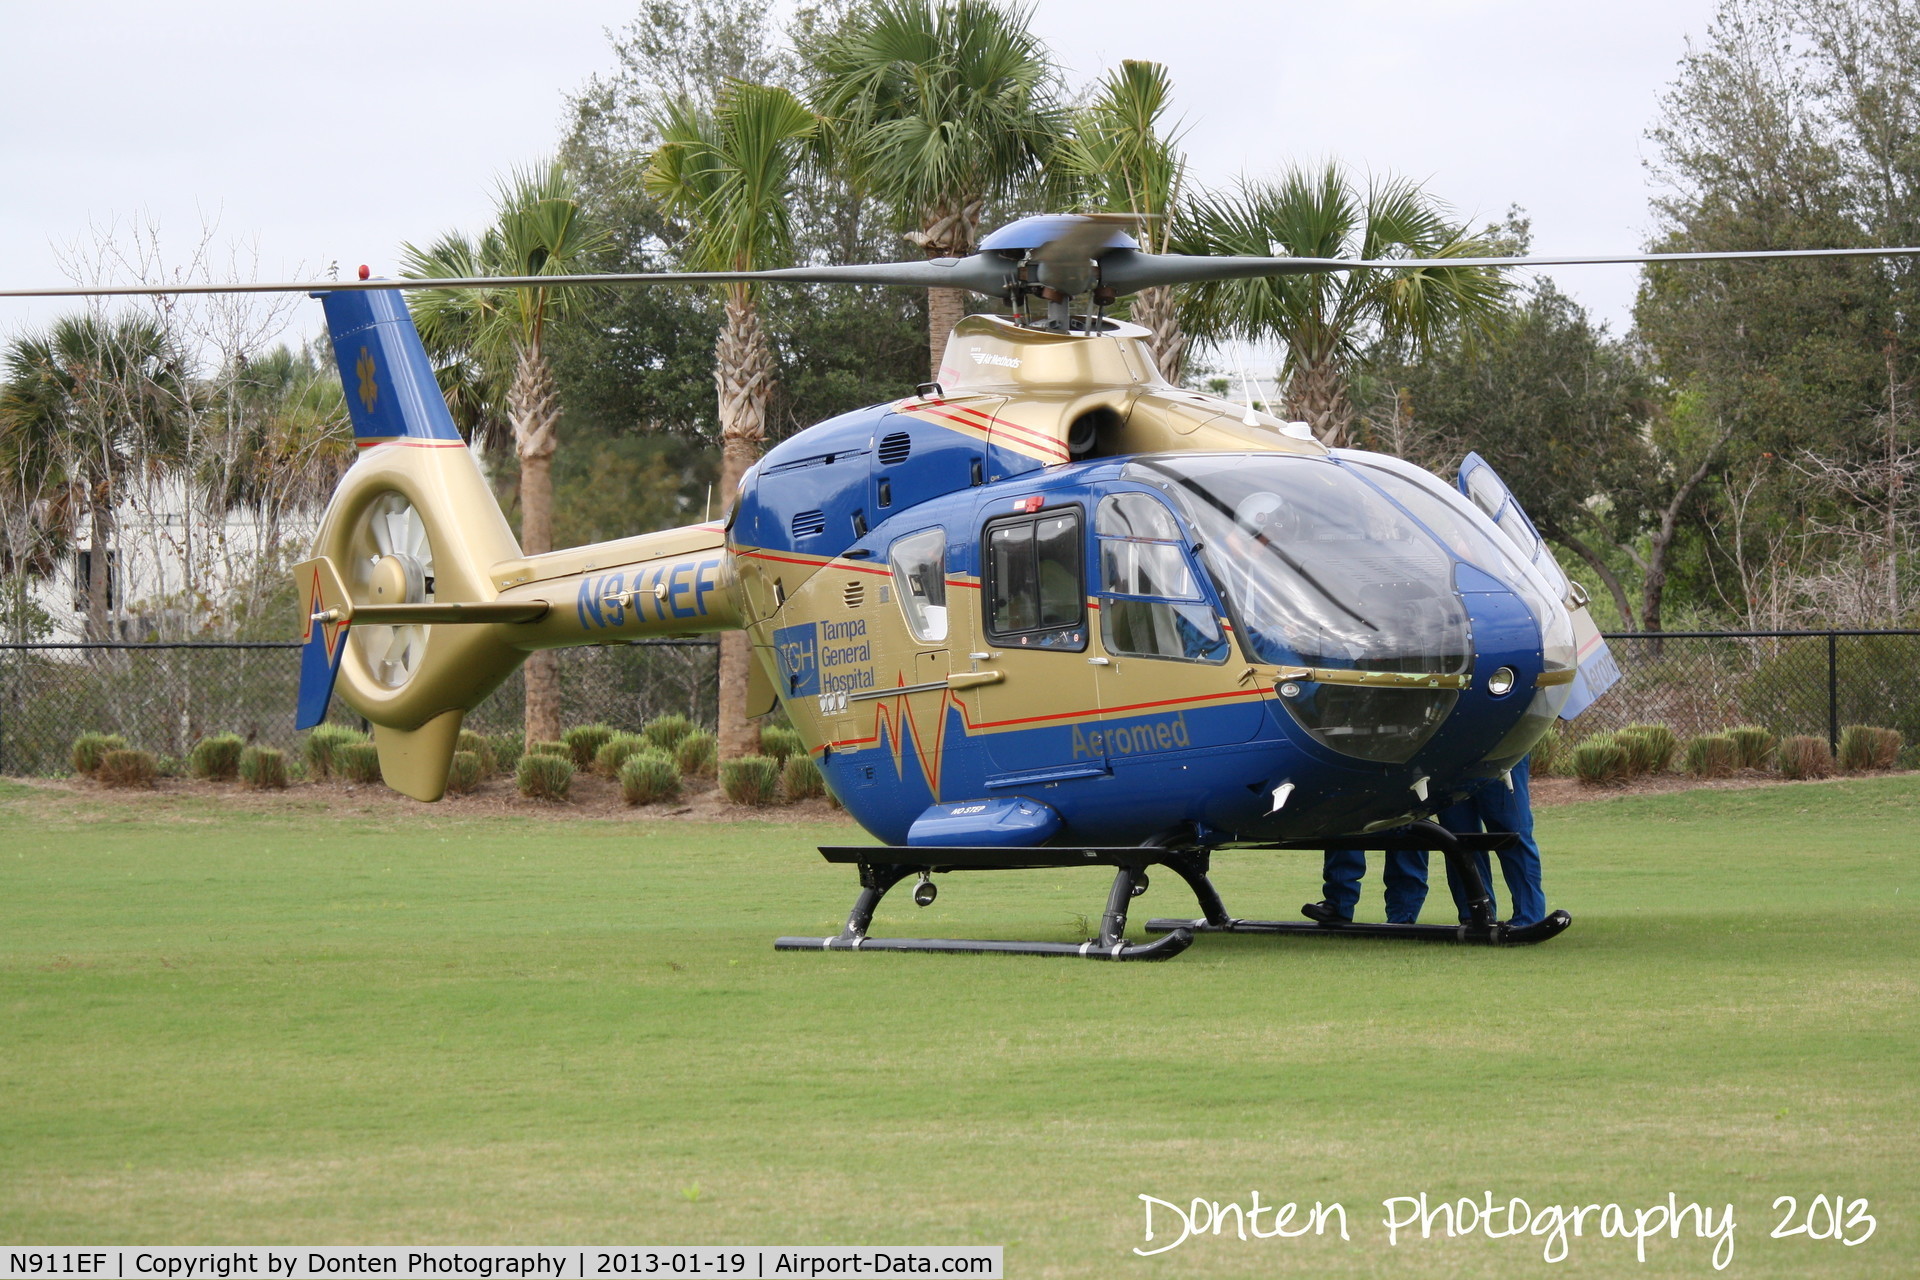 N911EF, 2005 Eurocopter EC-135T-2 C/N 0382, Aeromed (N911EF) lands at JetBlue Park for the American Heroes Air Show